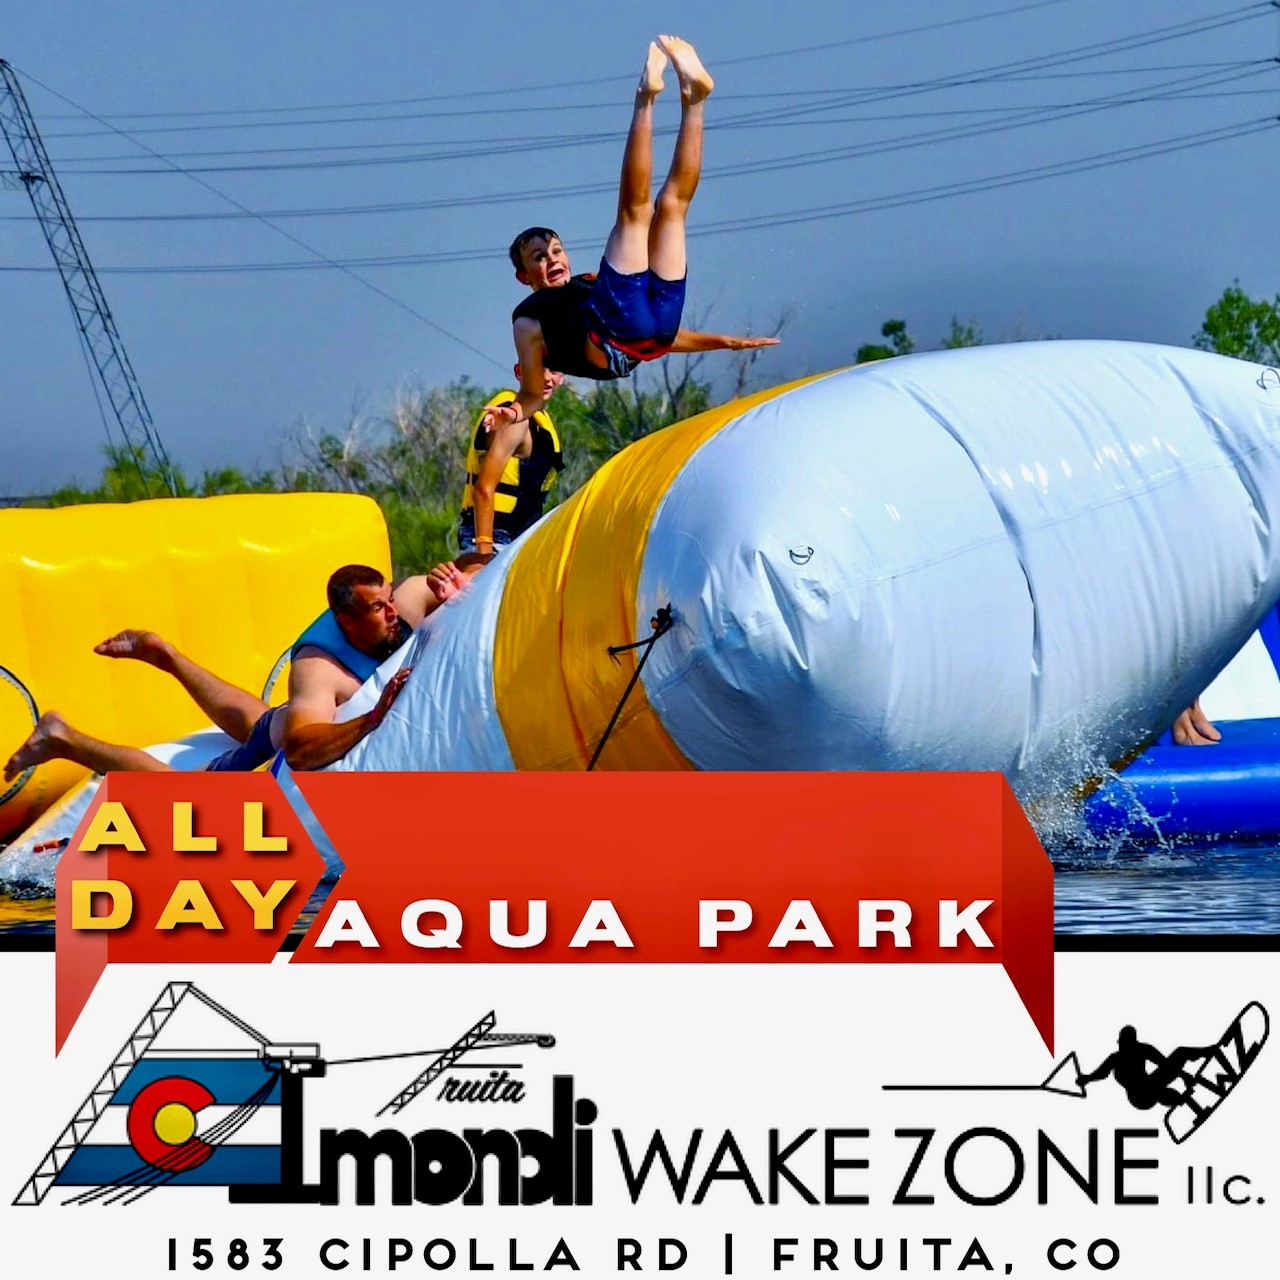 All Day Aqua Park Pass Imondi Wake Zone Online Productdetails